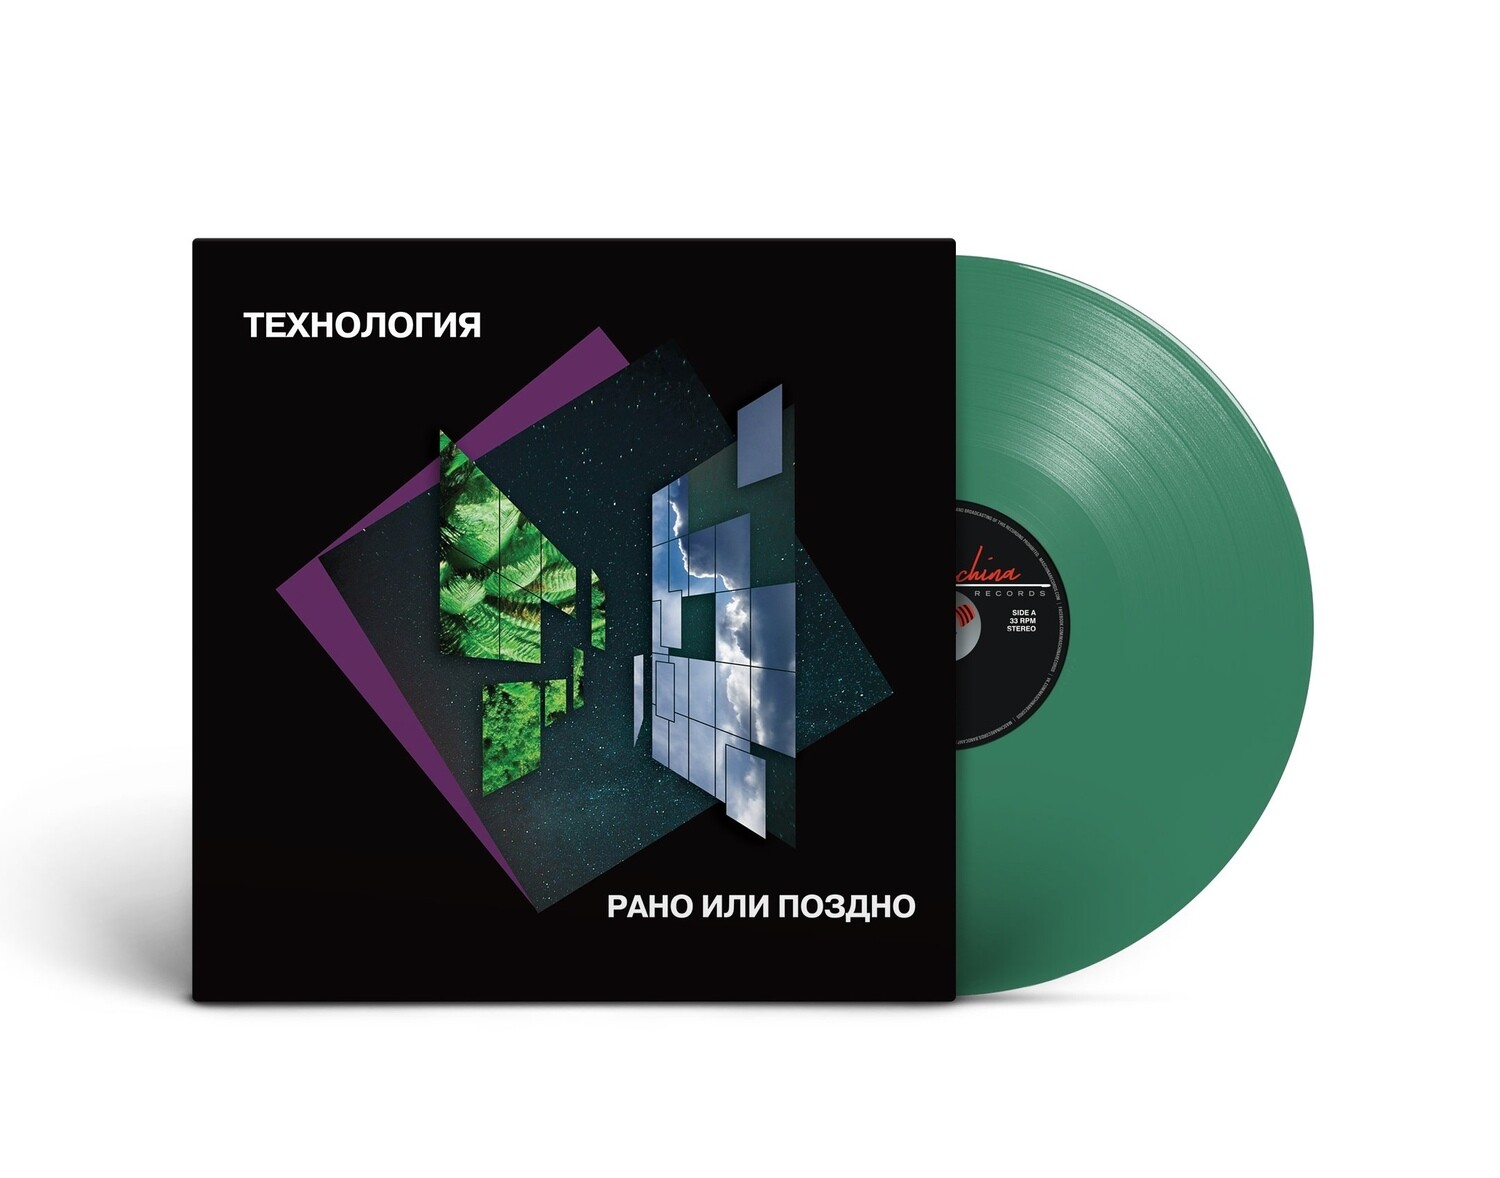 [PREORDER] LP: Технология — «Рано или поздно» (1993/2022)  [Limited Green Vinyl]